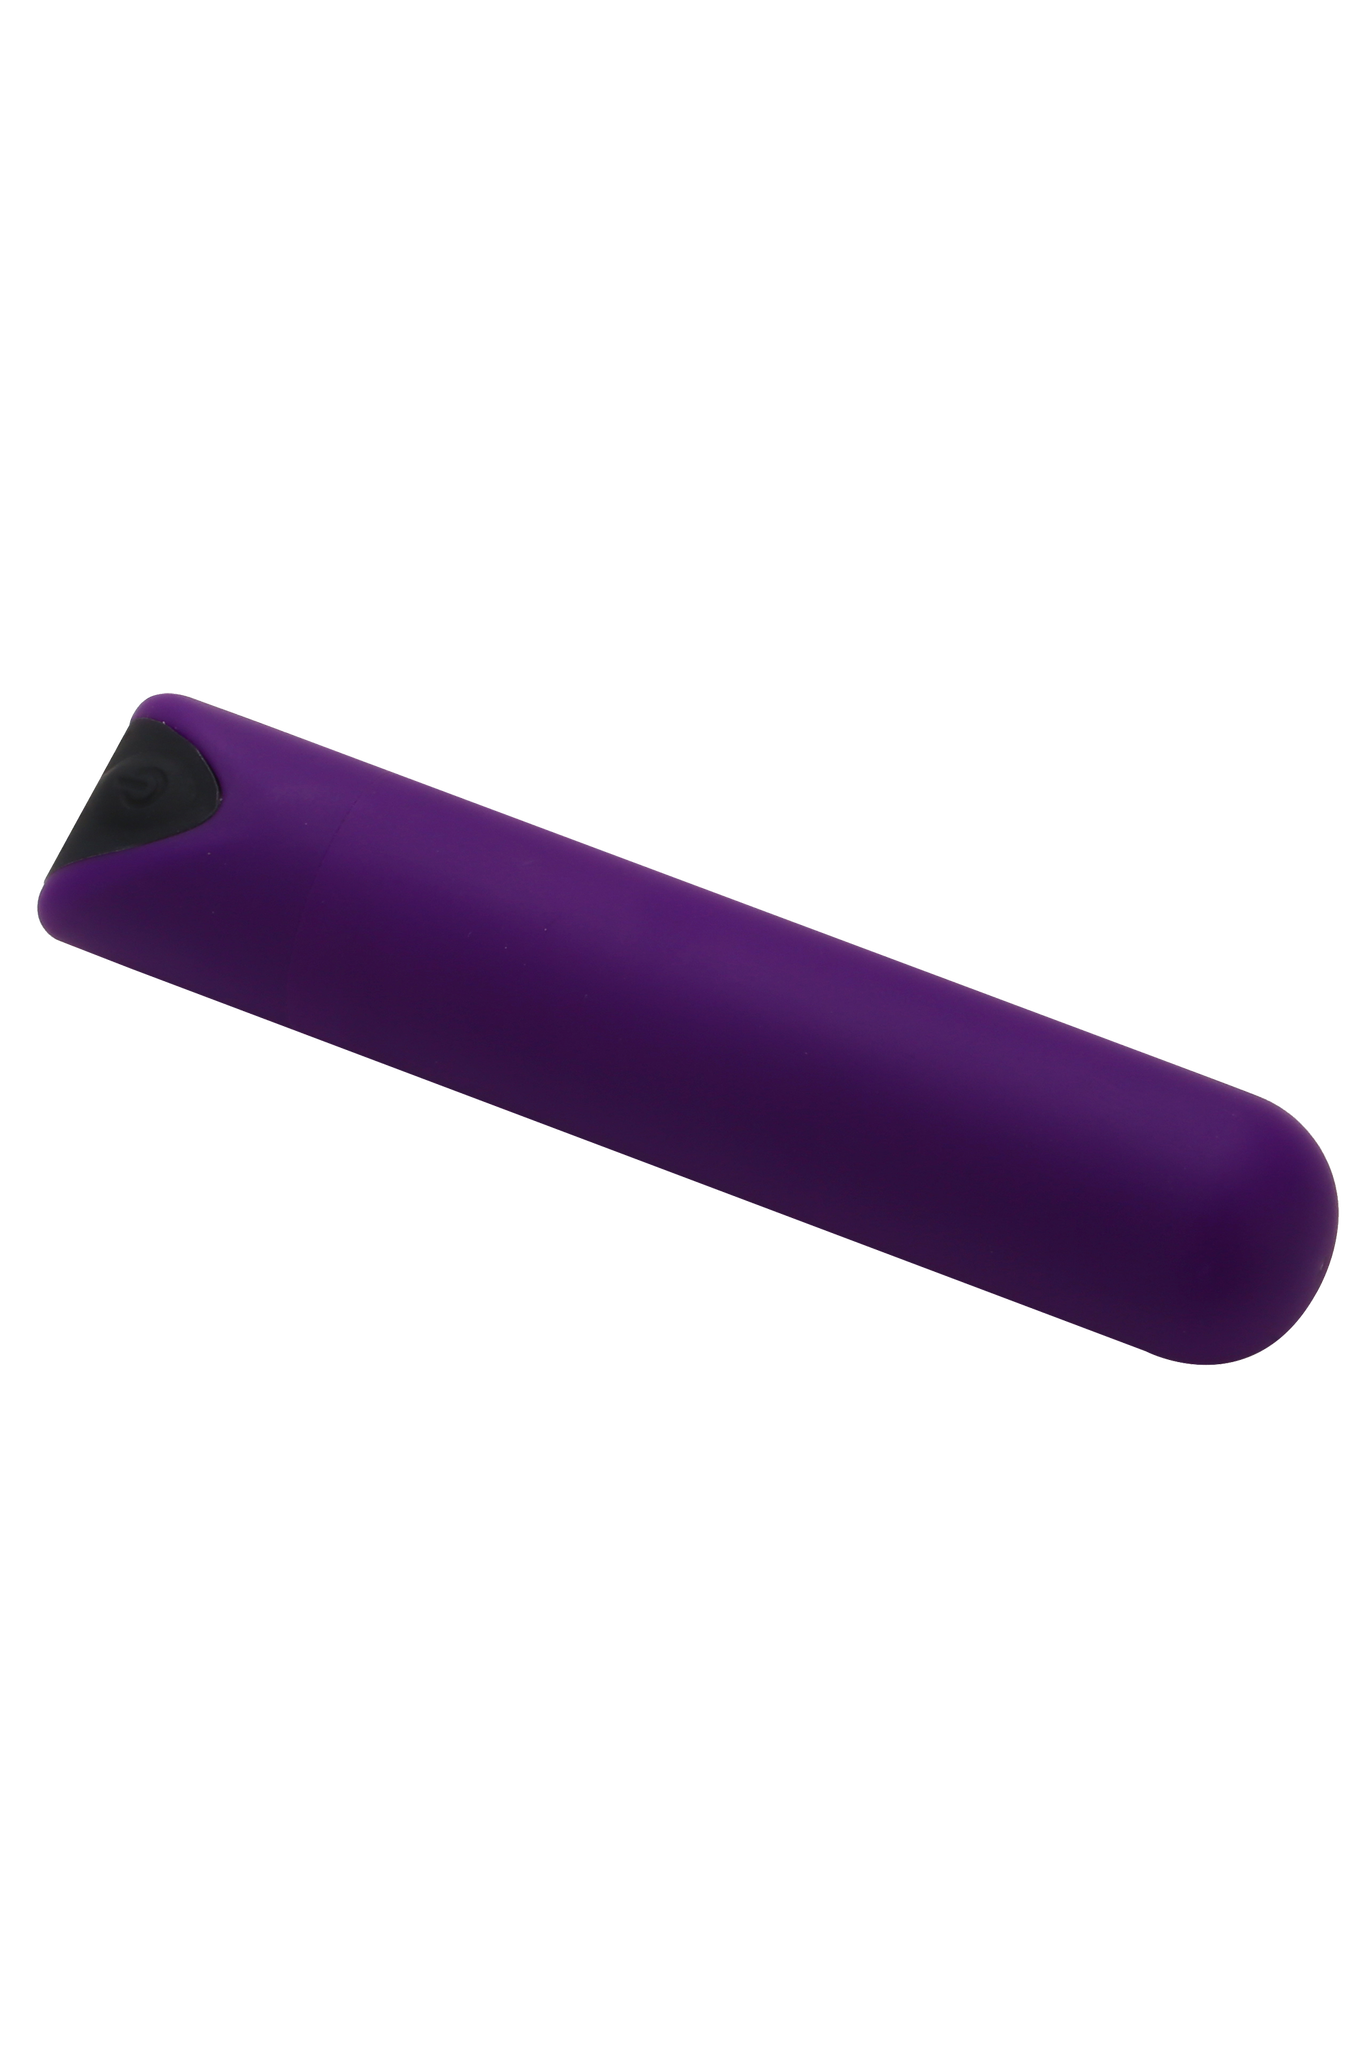 Vibes of Love - Powerful bullet, Purple